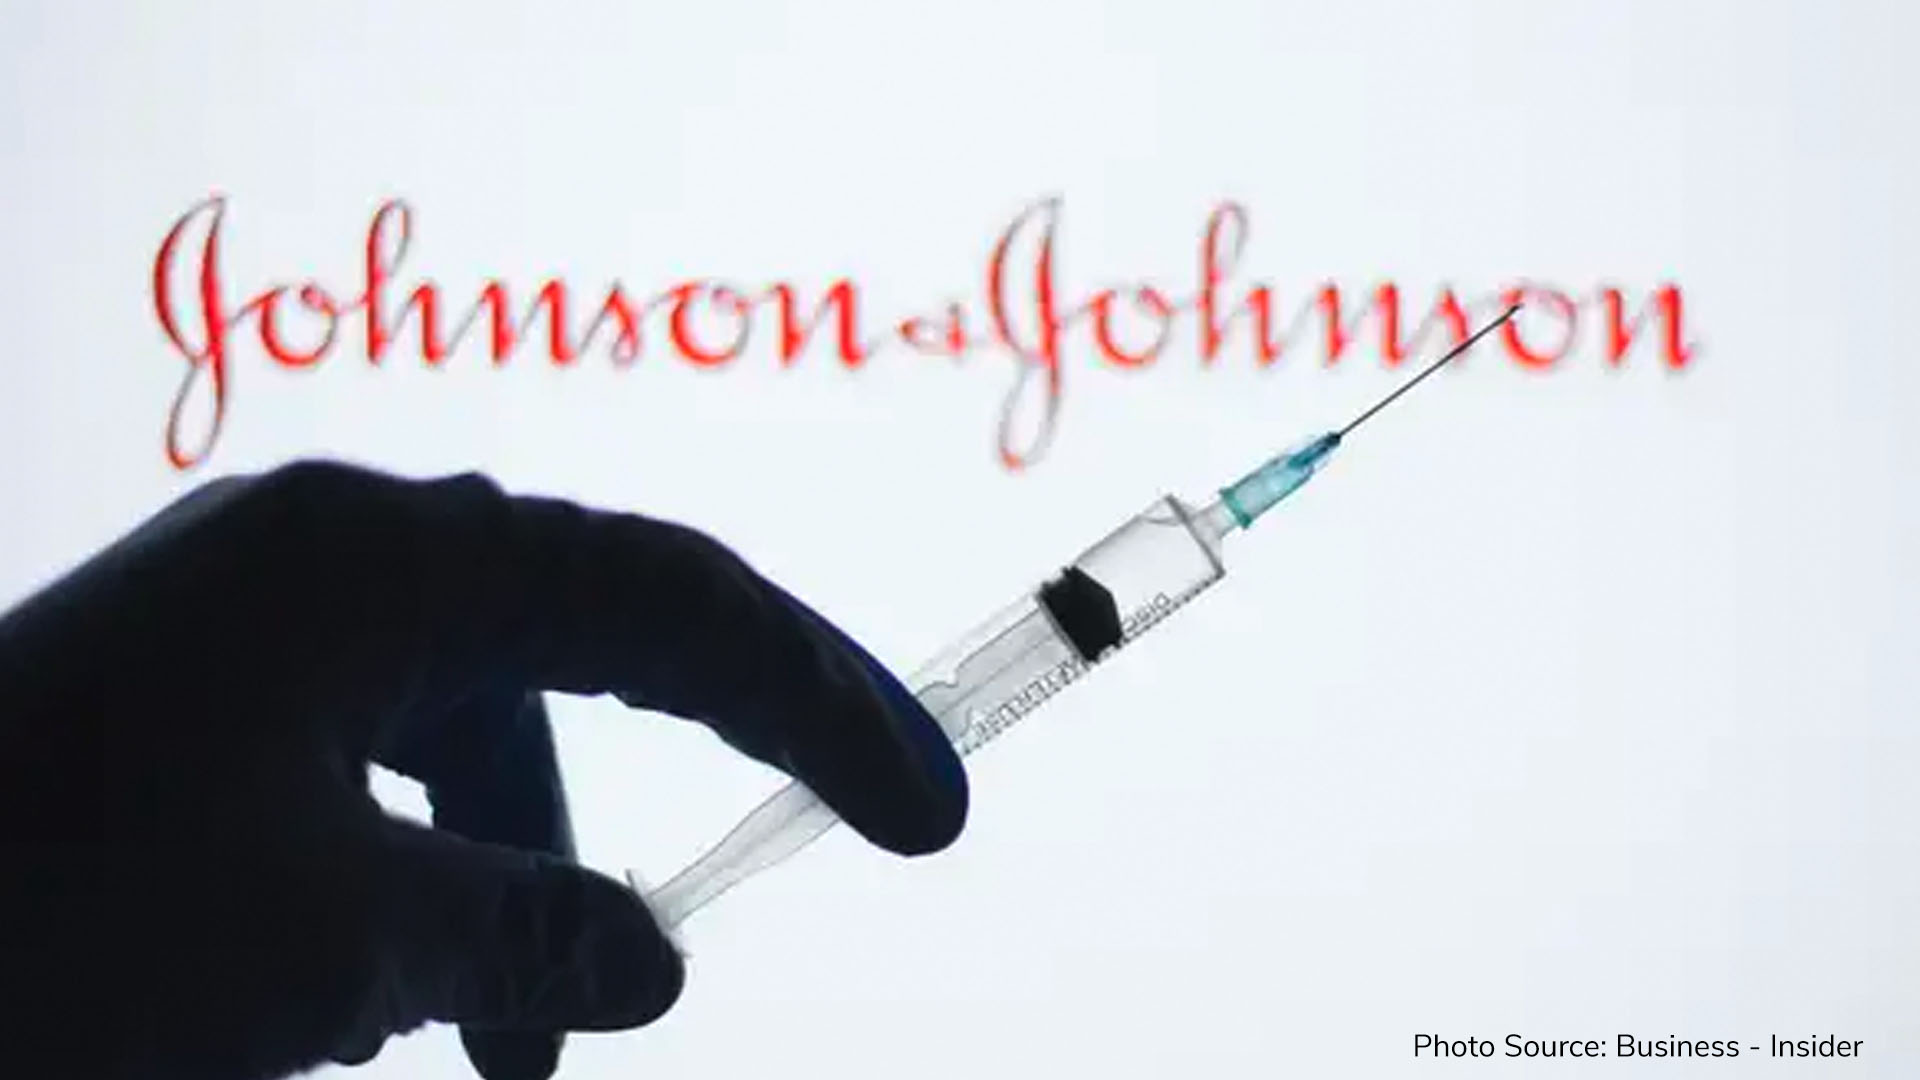 Malta will not administer Johnson & Johnson vaccine following blood clot concerns